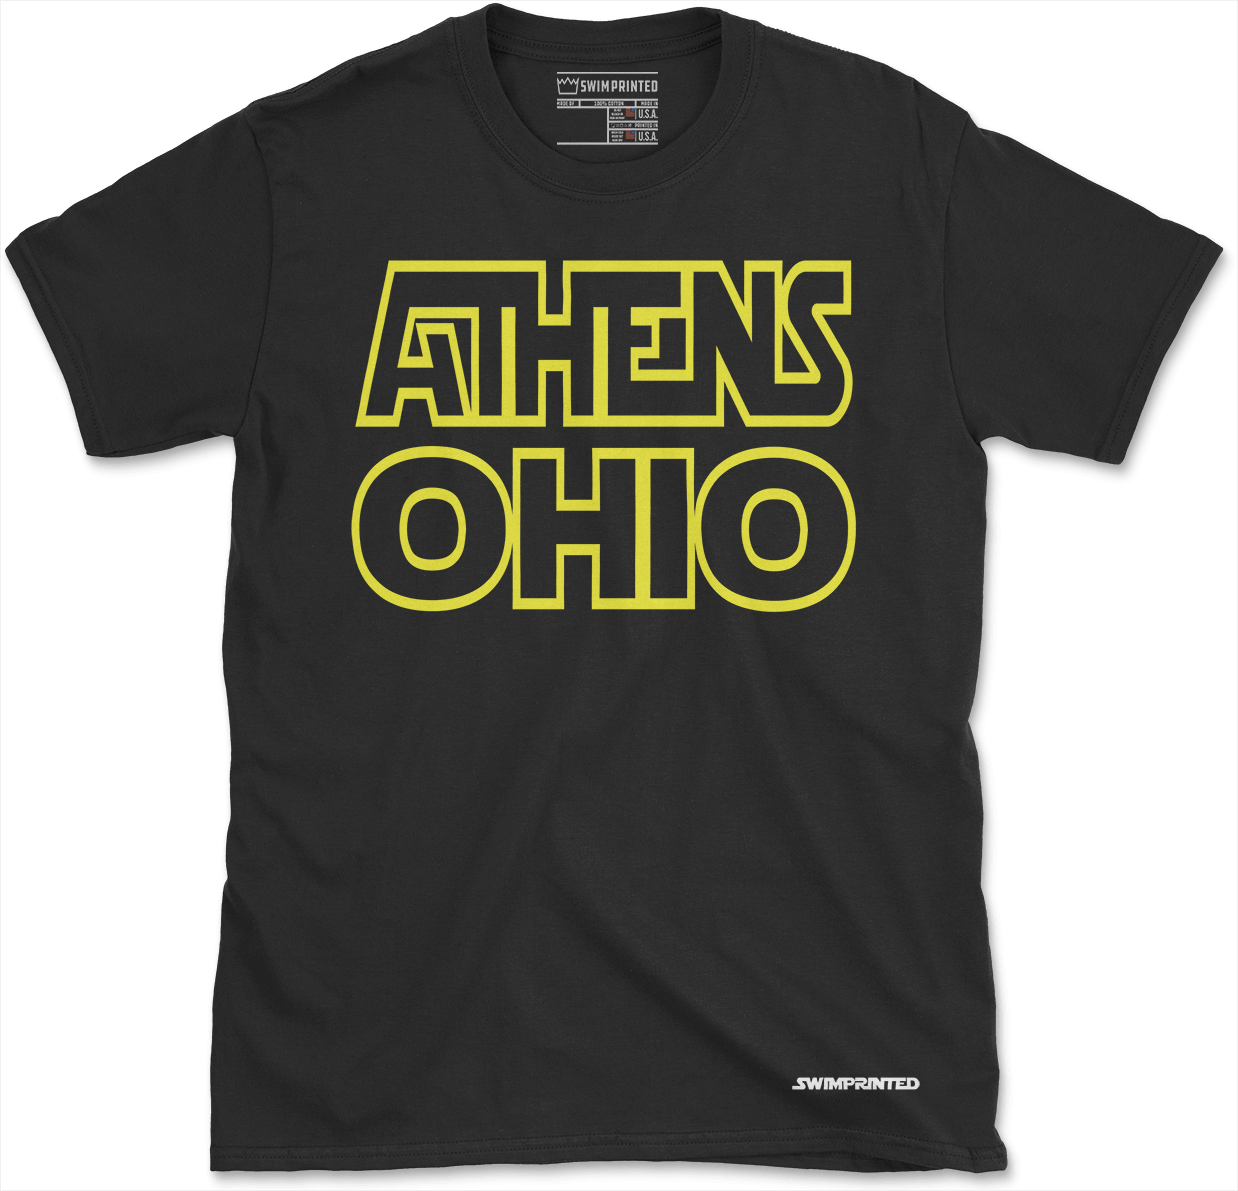 Star Wars Athens Ohio (Black)